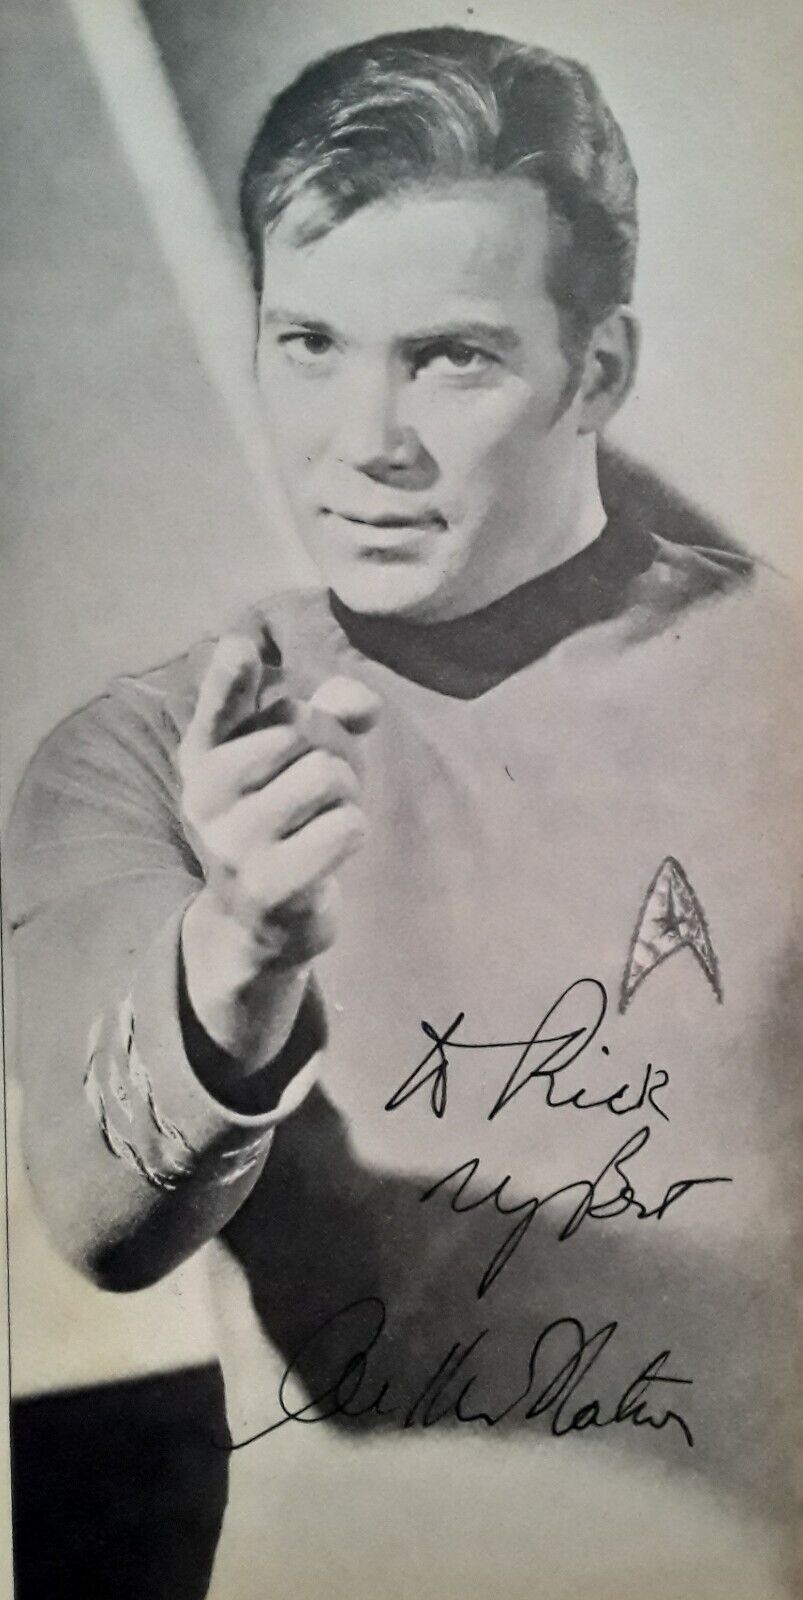 WILLIAM SHATTNER AUTOGRAPH STARLOG Magazine No. 1 Aug. 1976 Star Trek 